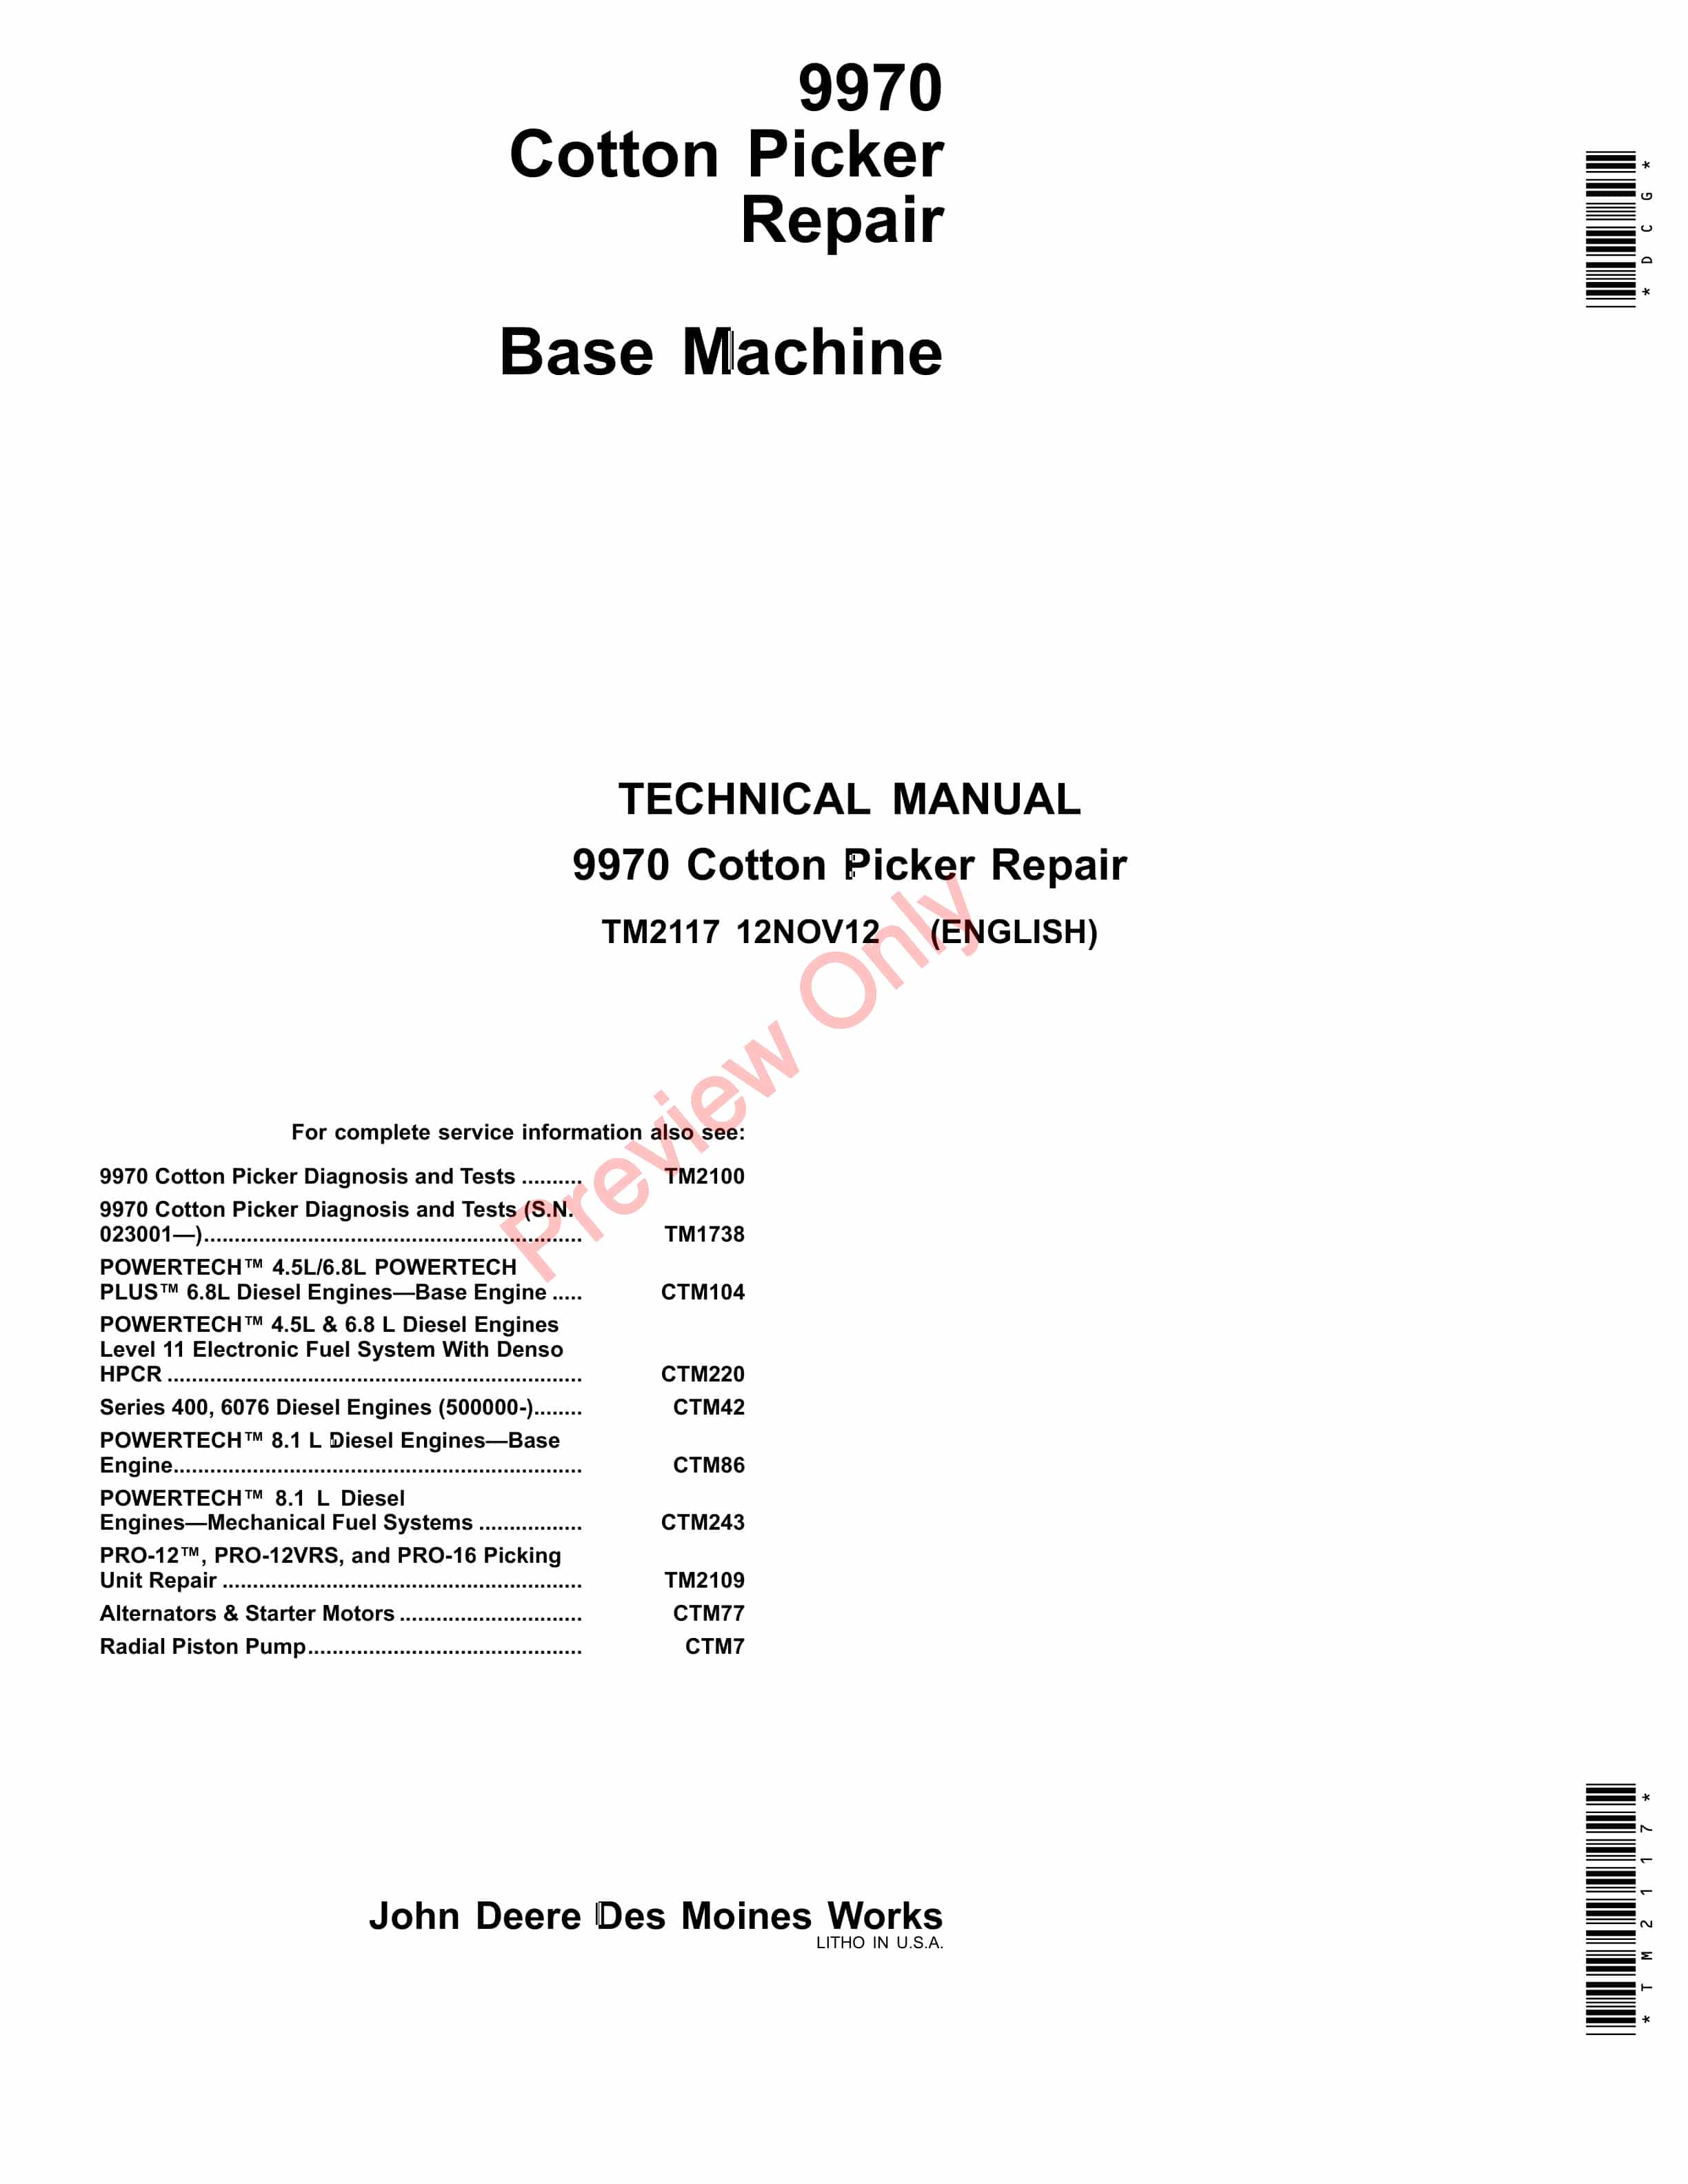 John Deere 9970 Cotton Picker Base Machine Technical Manual TM2117 12NOV12 1